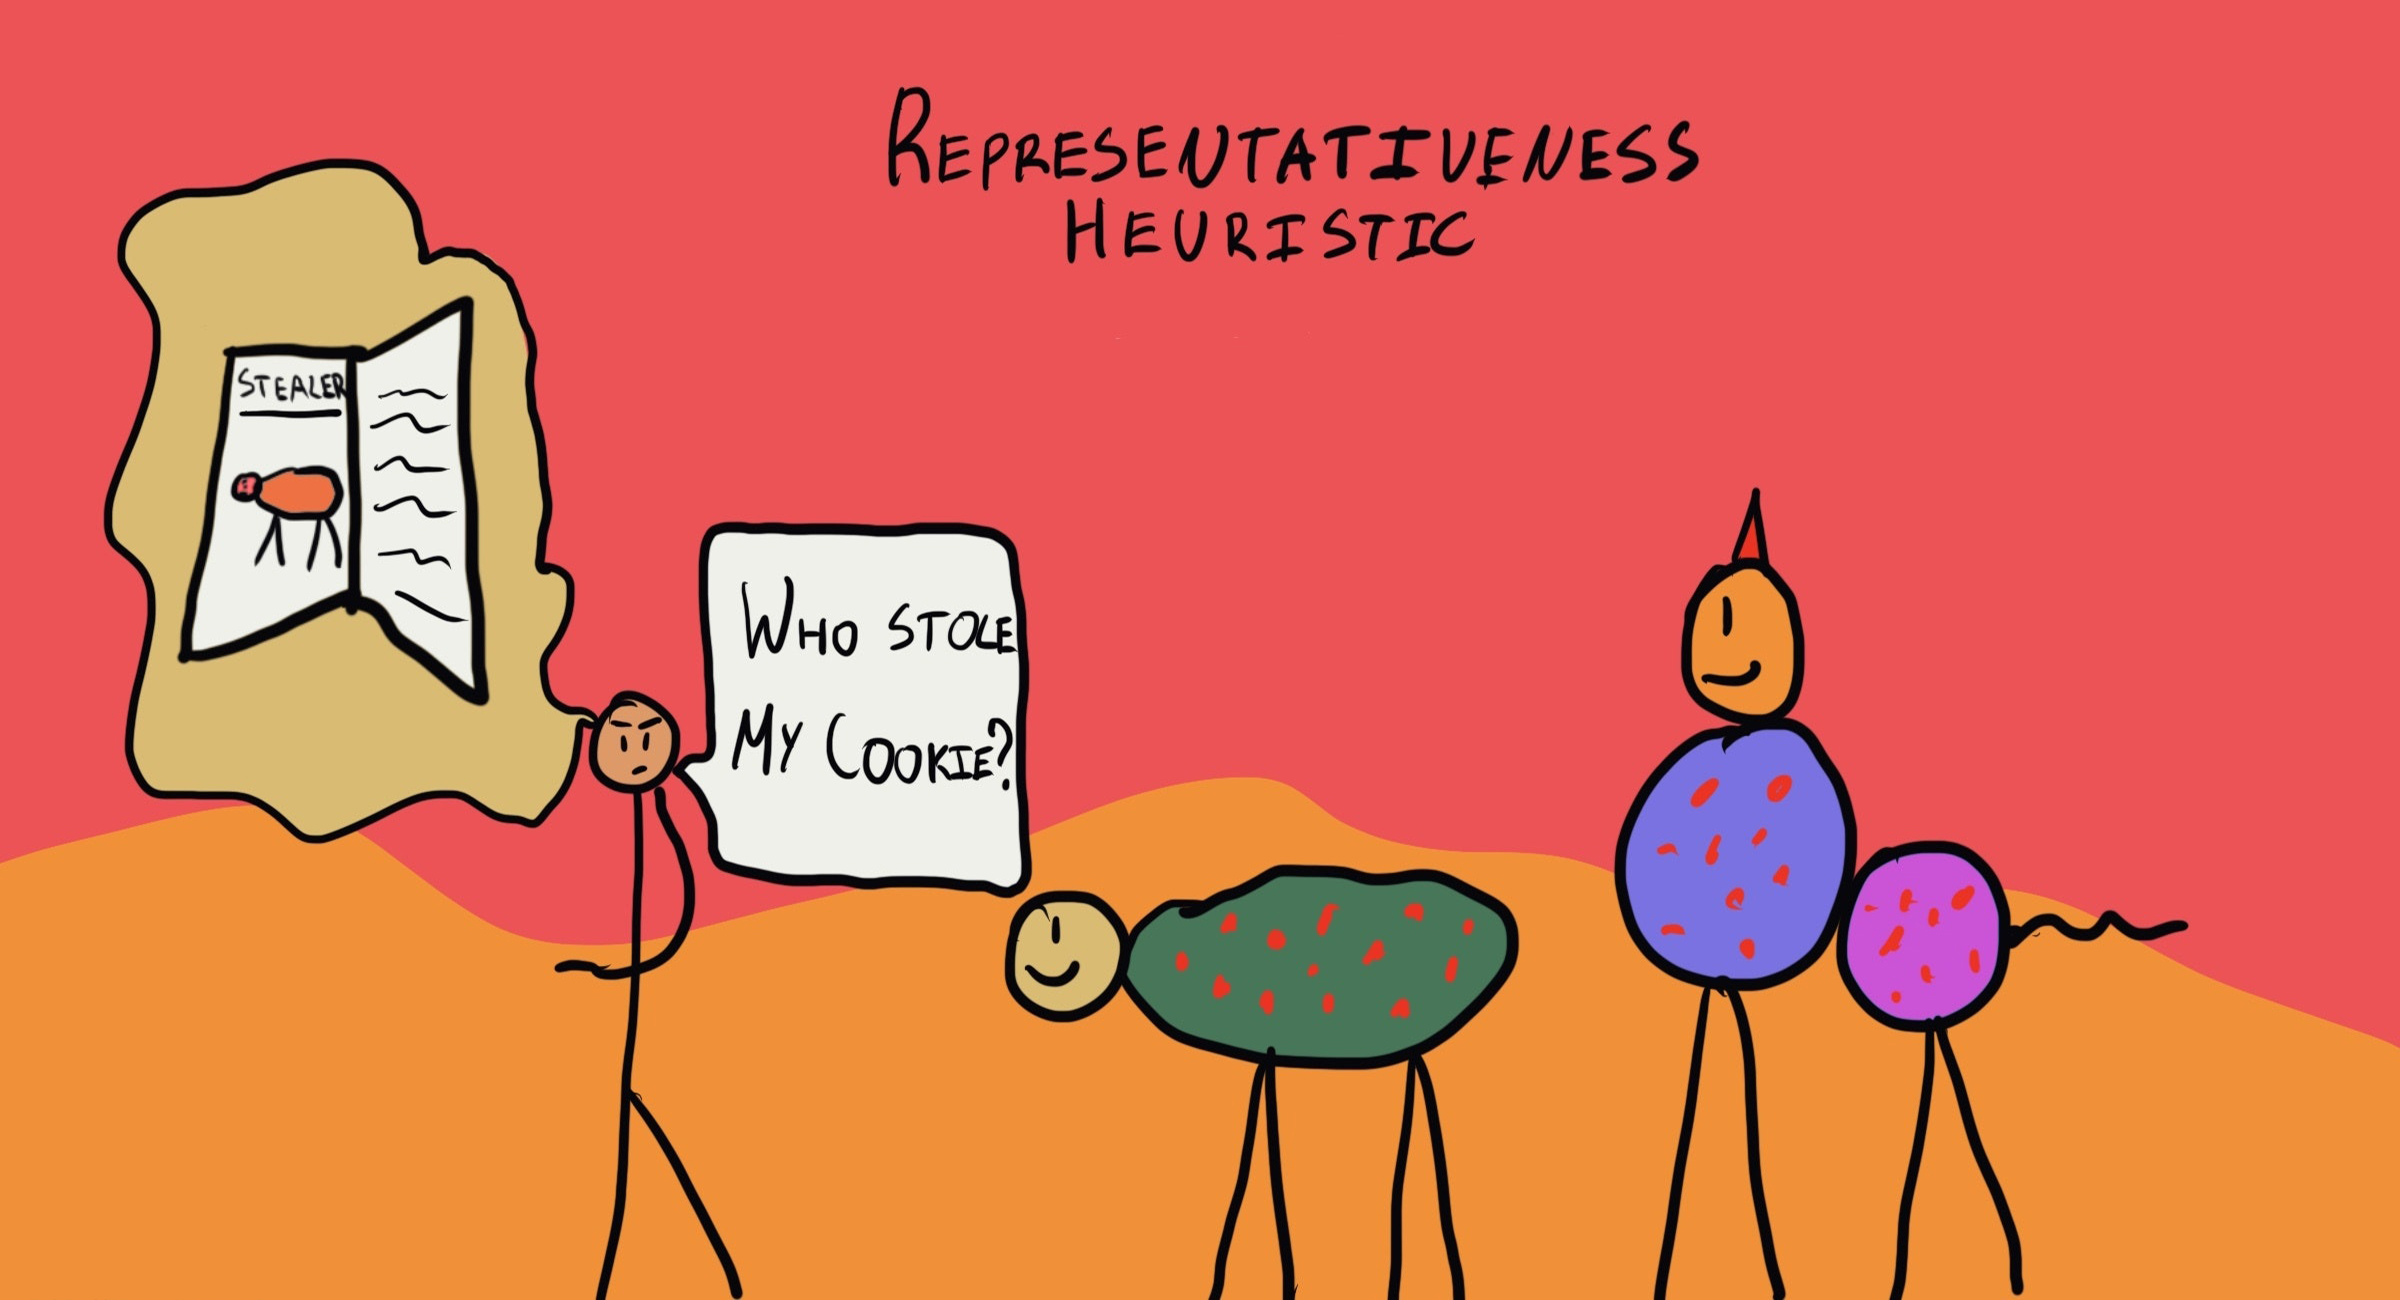 Representativeness Heuristic illustrations